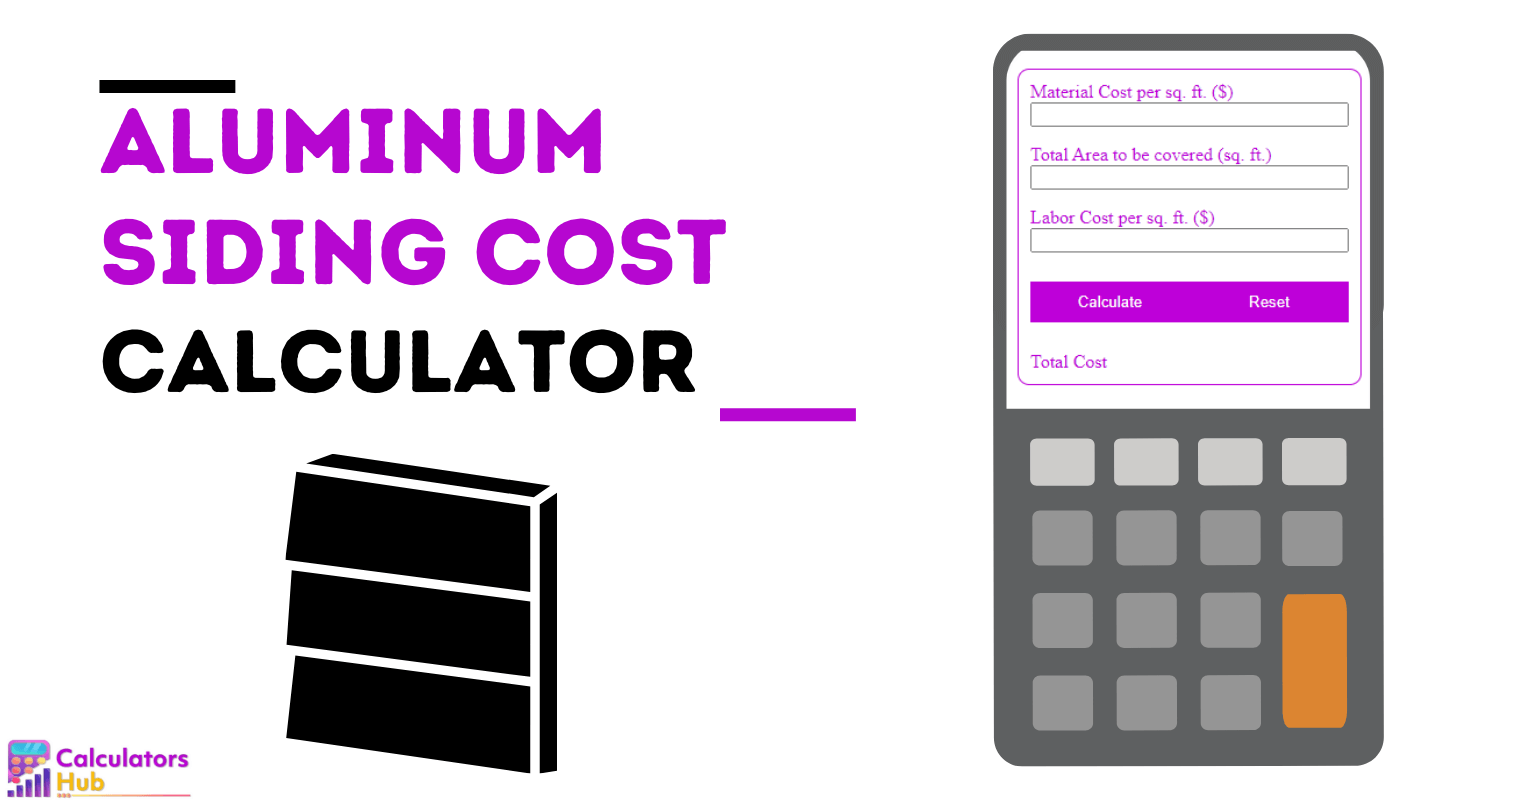 Aluminum Siding Cost Calculator